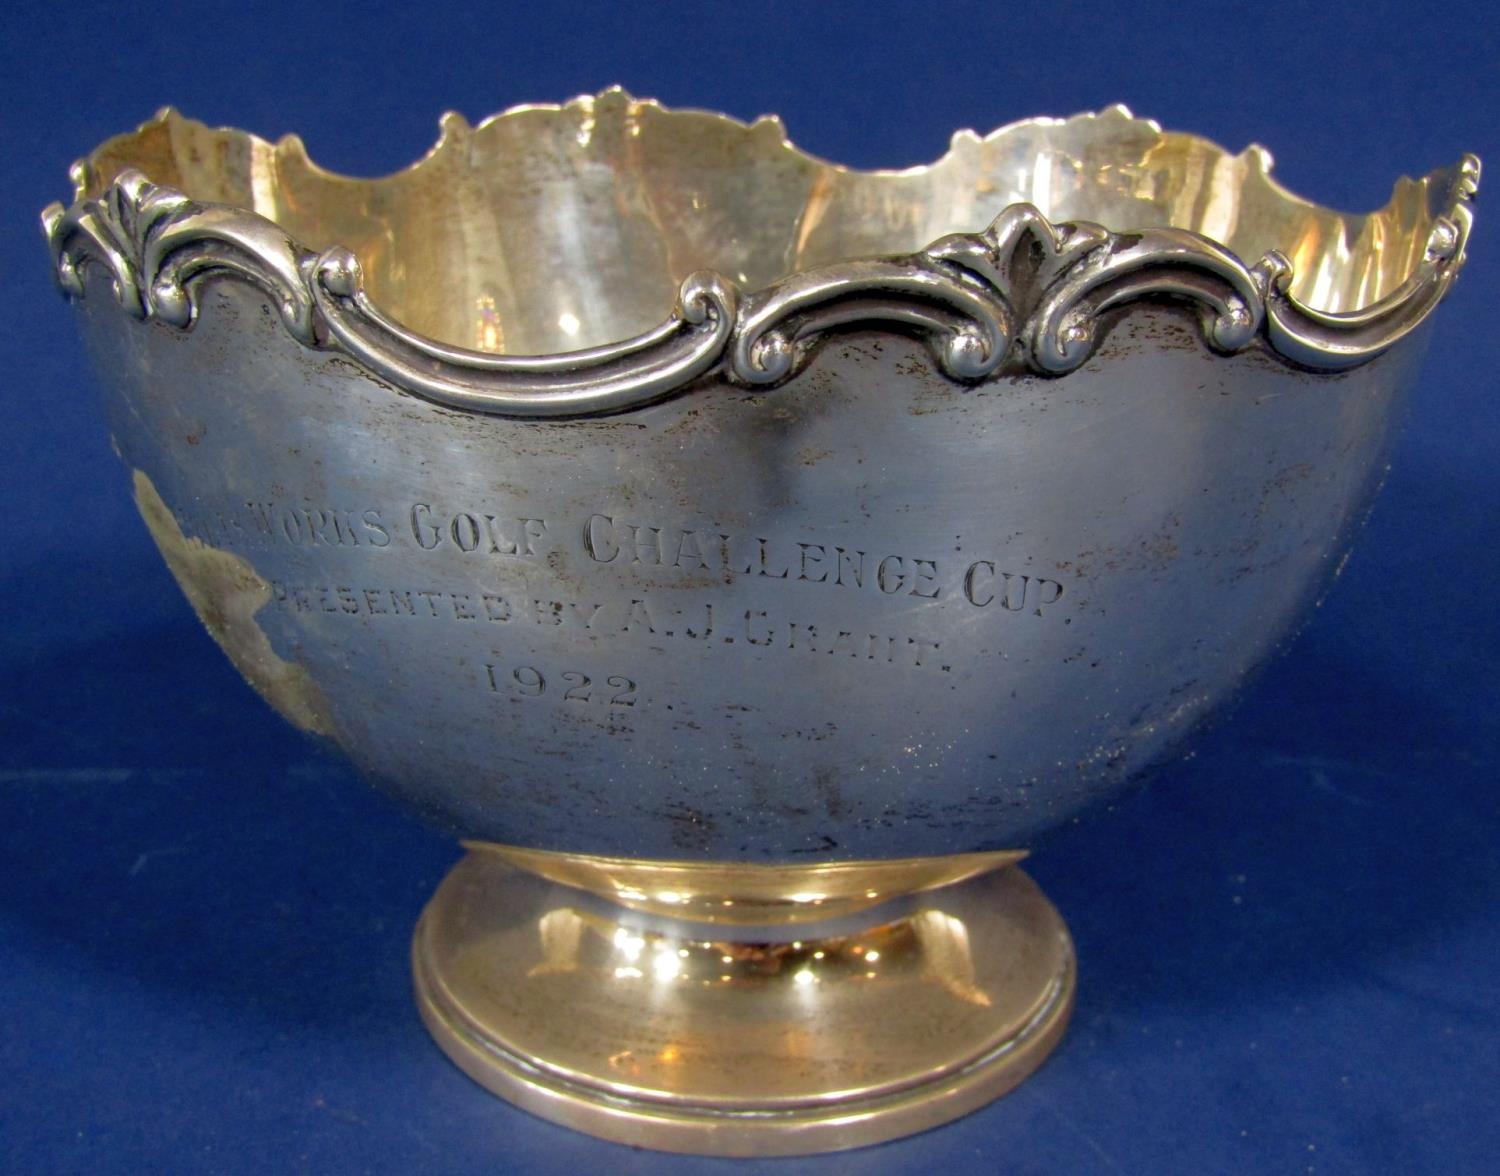 1920s silver presentation pedestal bowl inscribed Atlas Works Golf Challenge Cup, Presented by AJ - Image 2 of 3